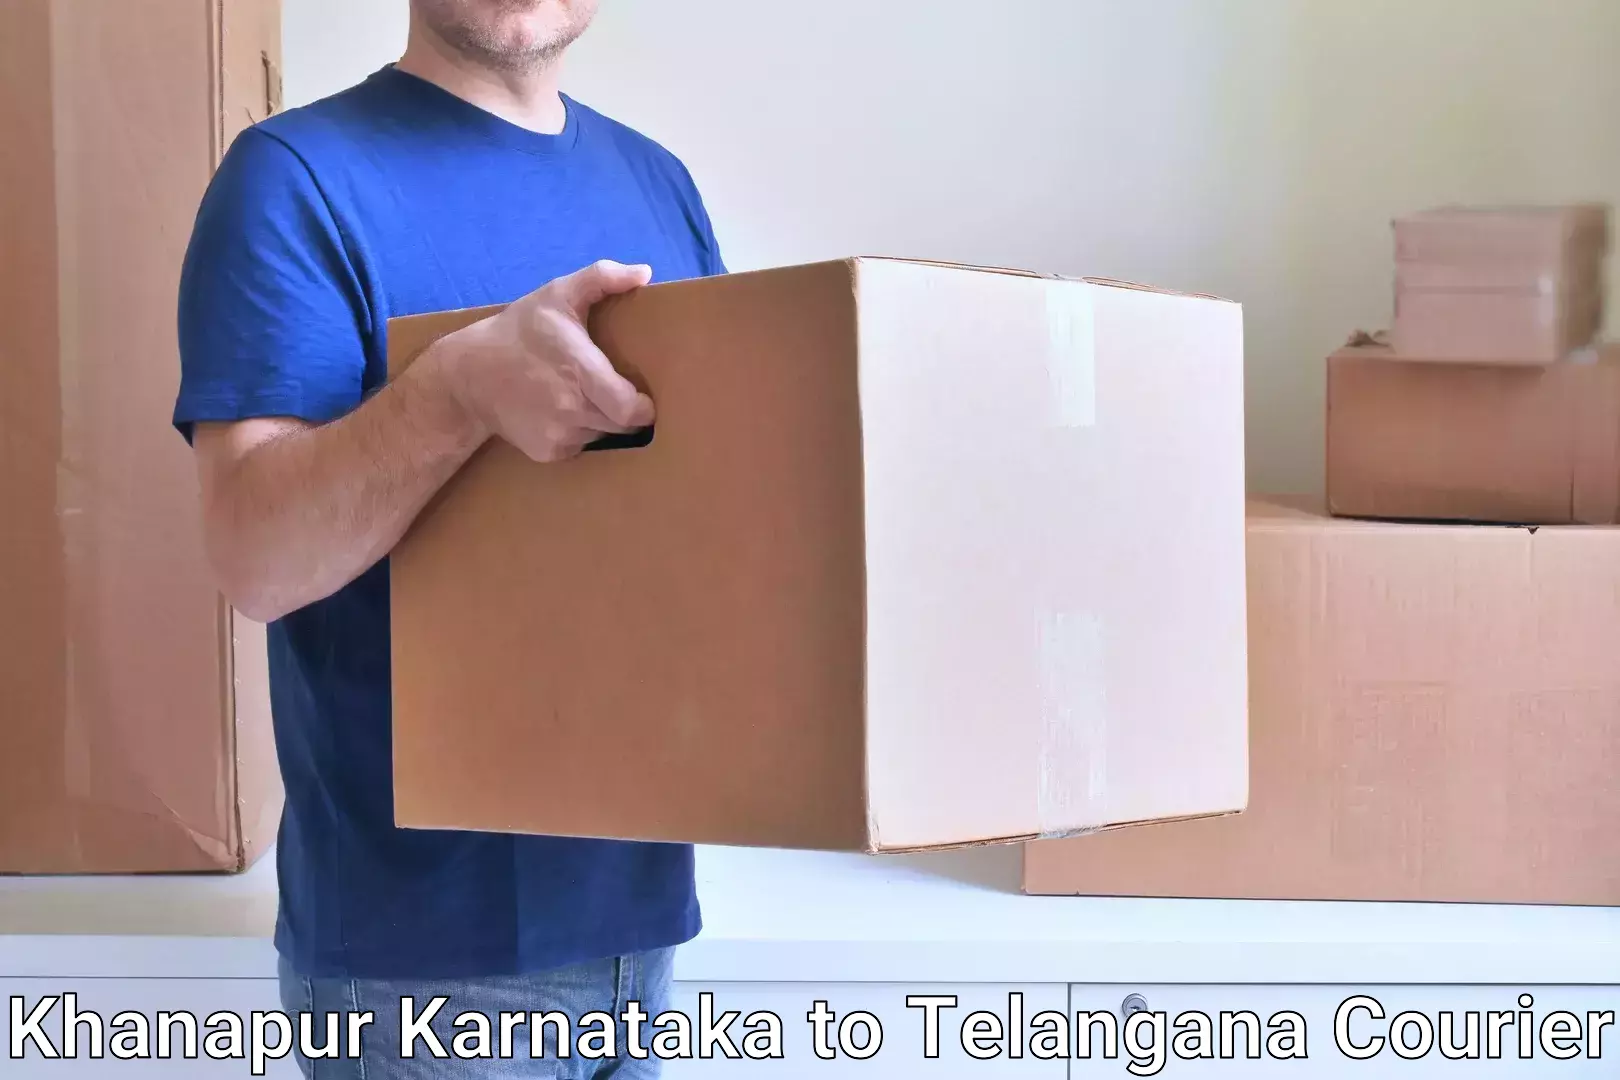 International courier networks Khanapur Karnataka to Hayathnagar